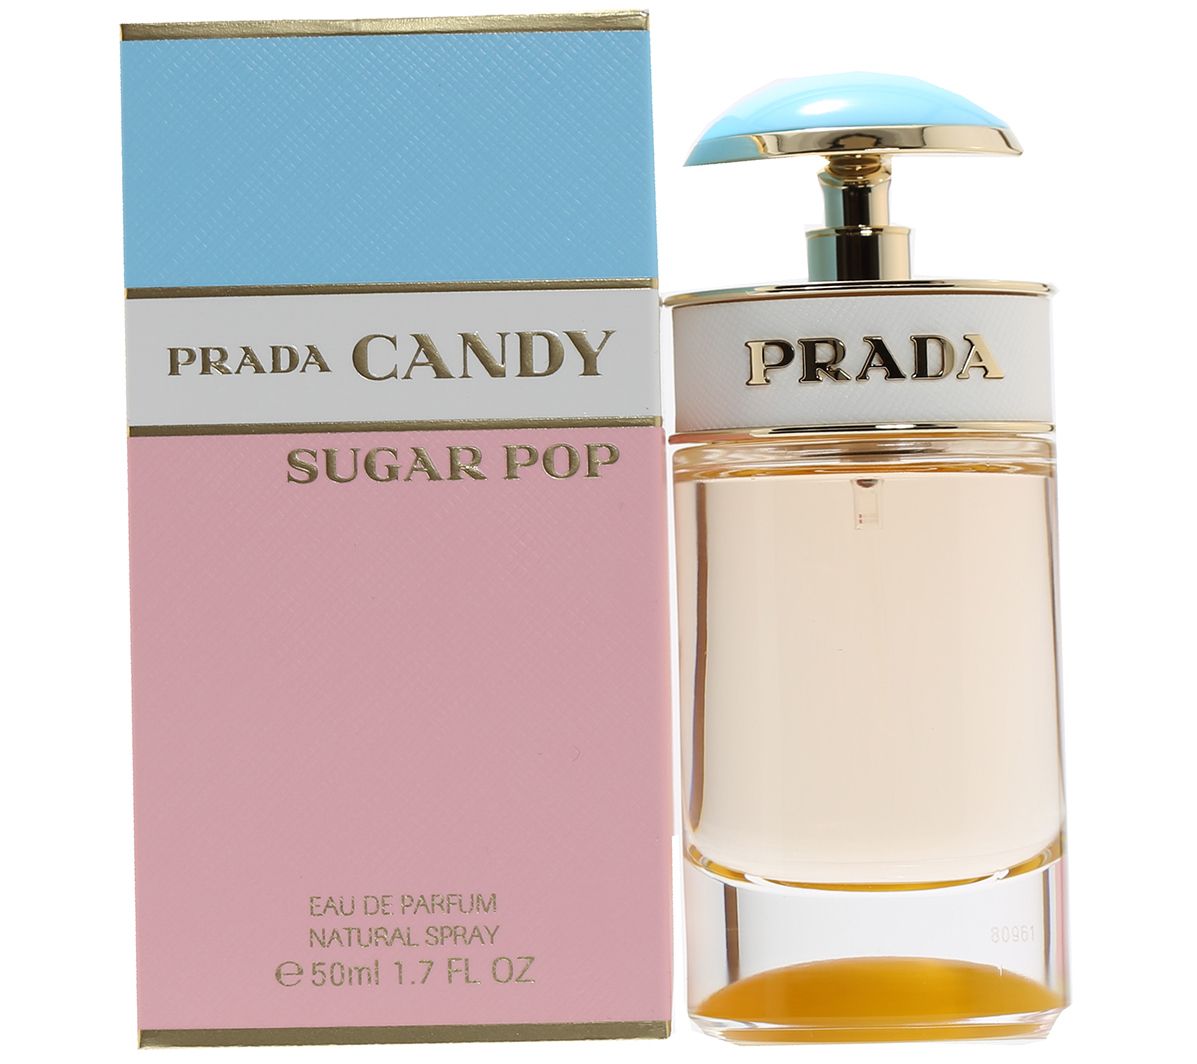 Prada Candy - Pop Lad Sugar ies Spray De Parfum Eau